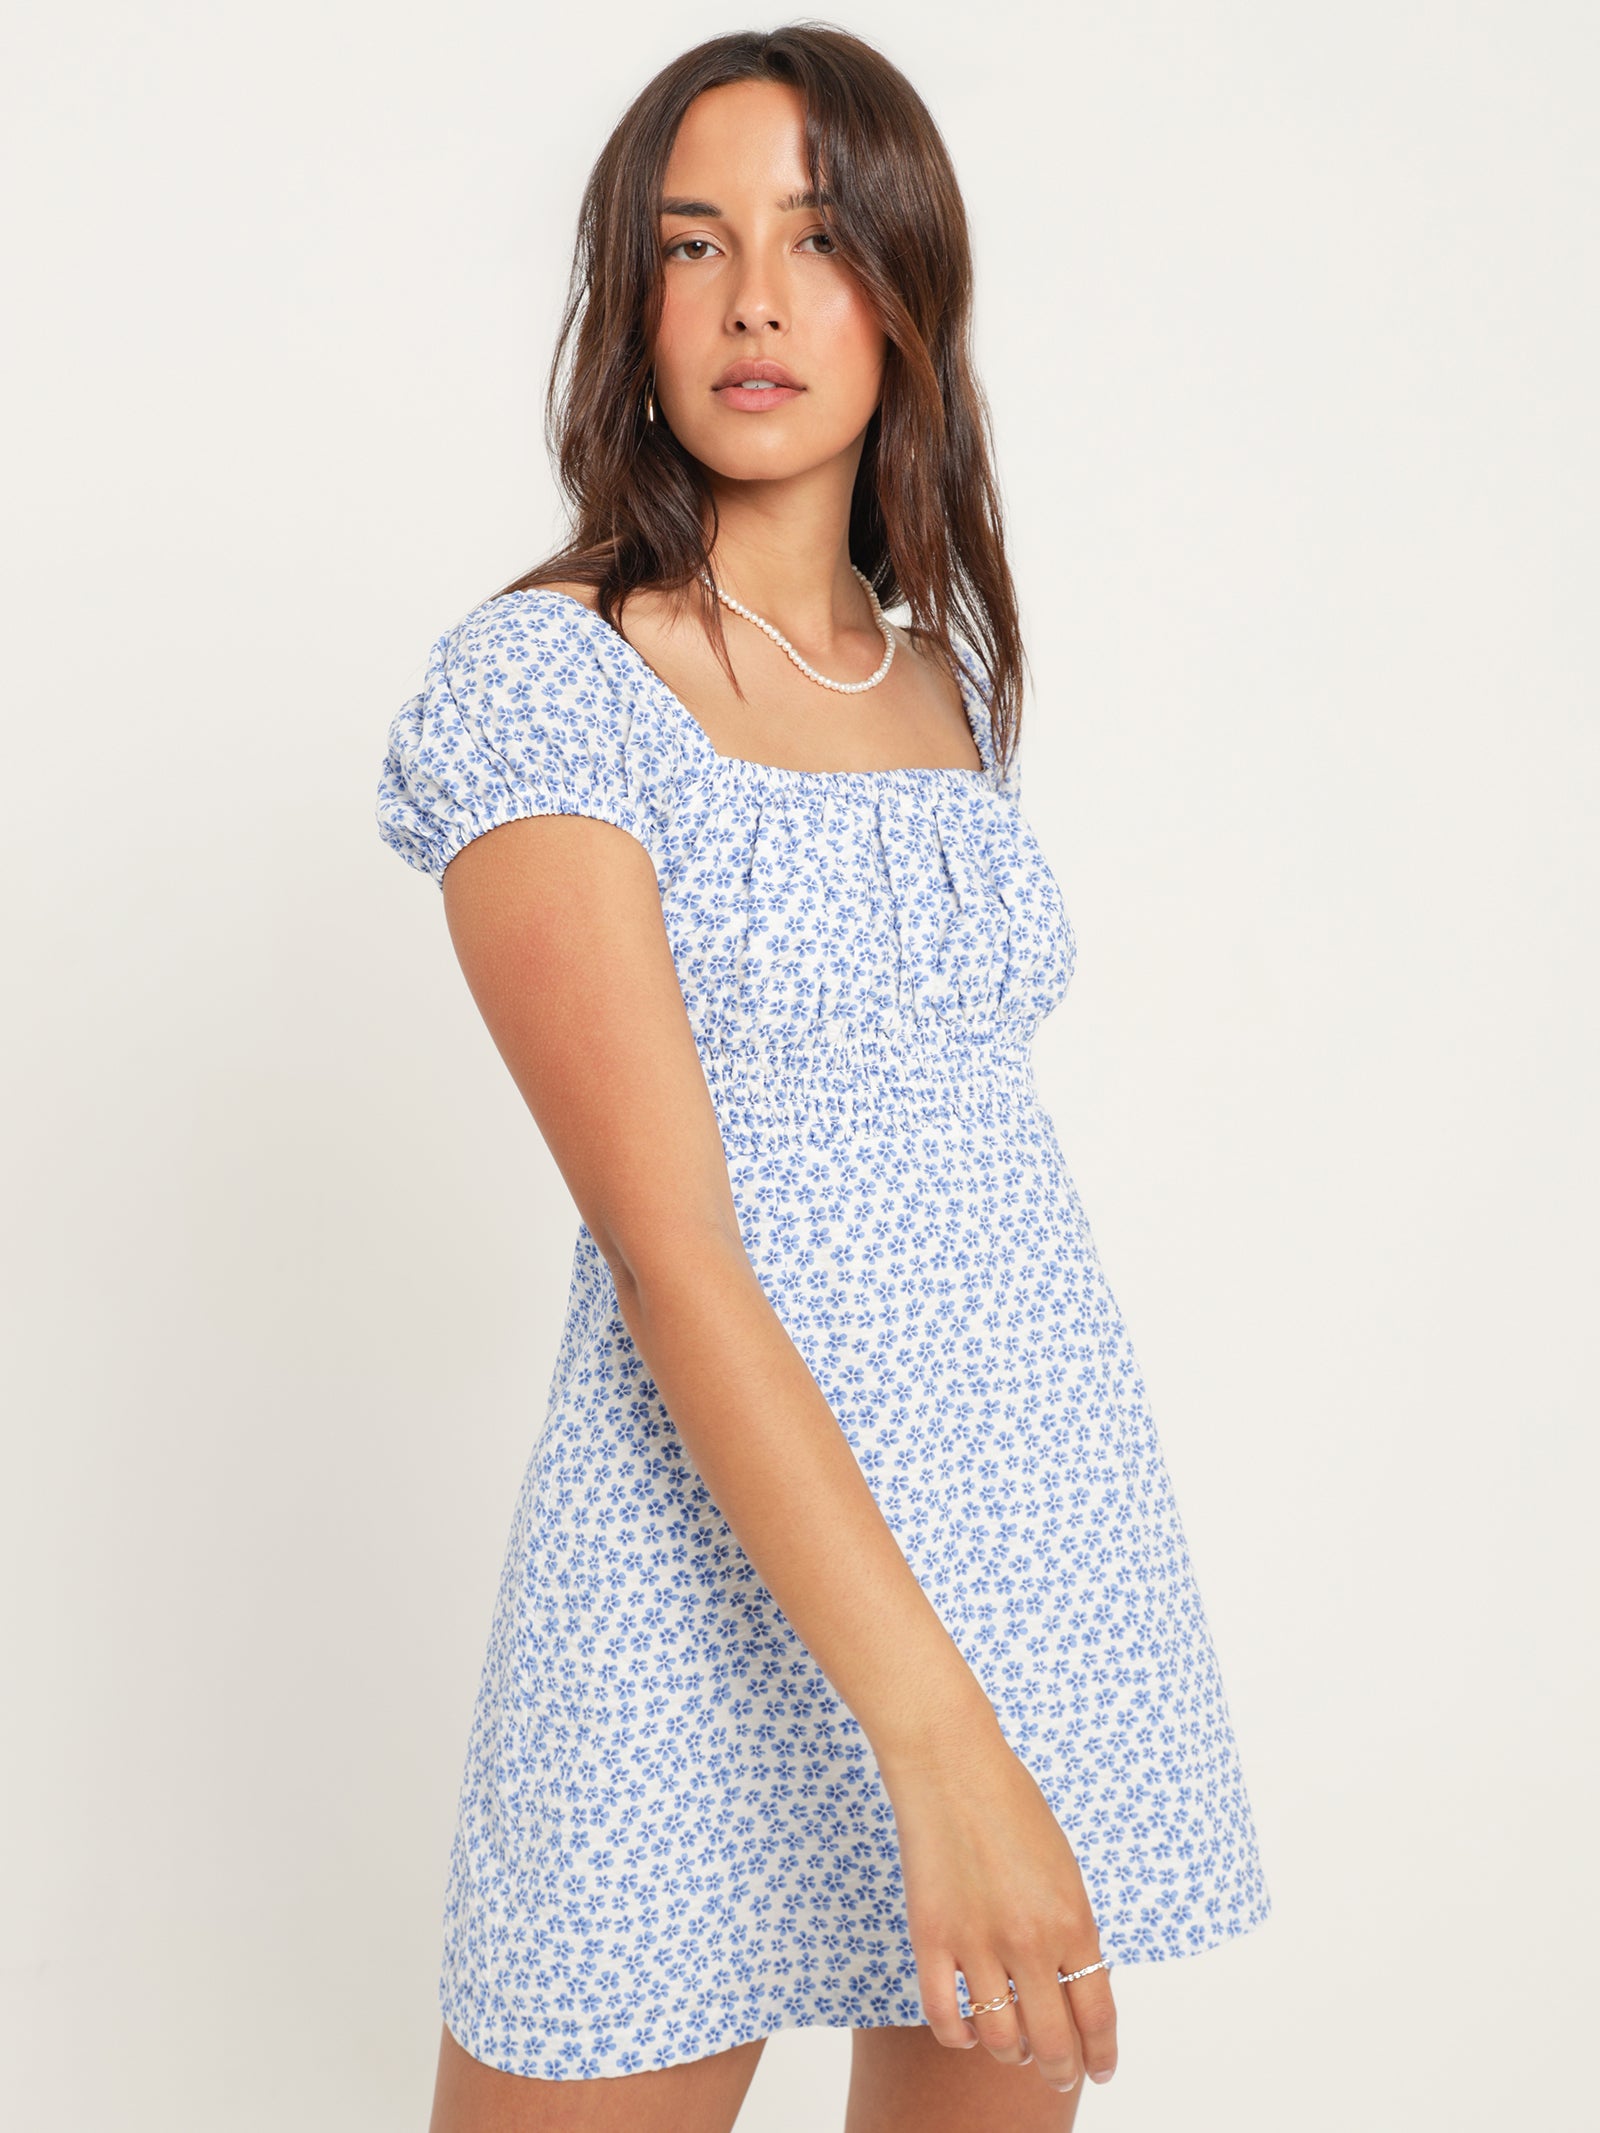 Lucie Mini Dress in Blue & White Tropez Floral Print